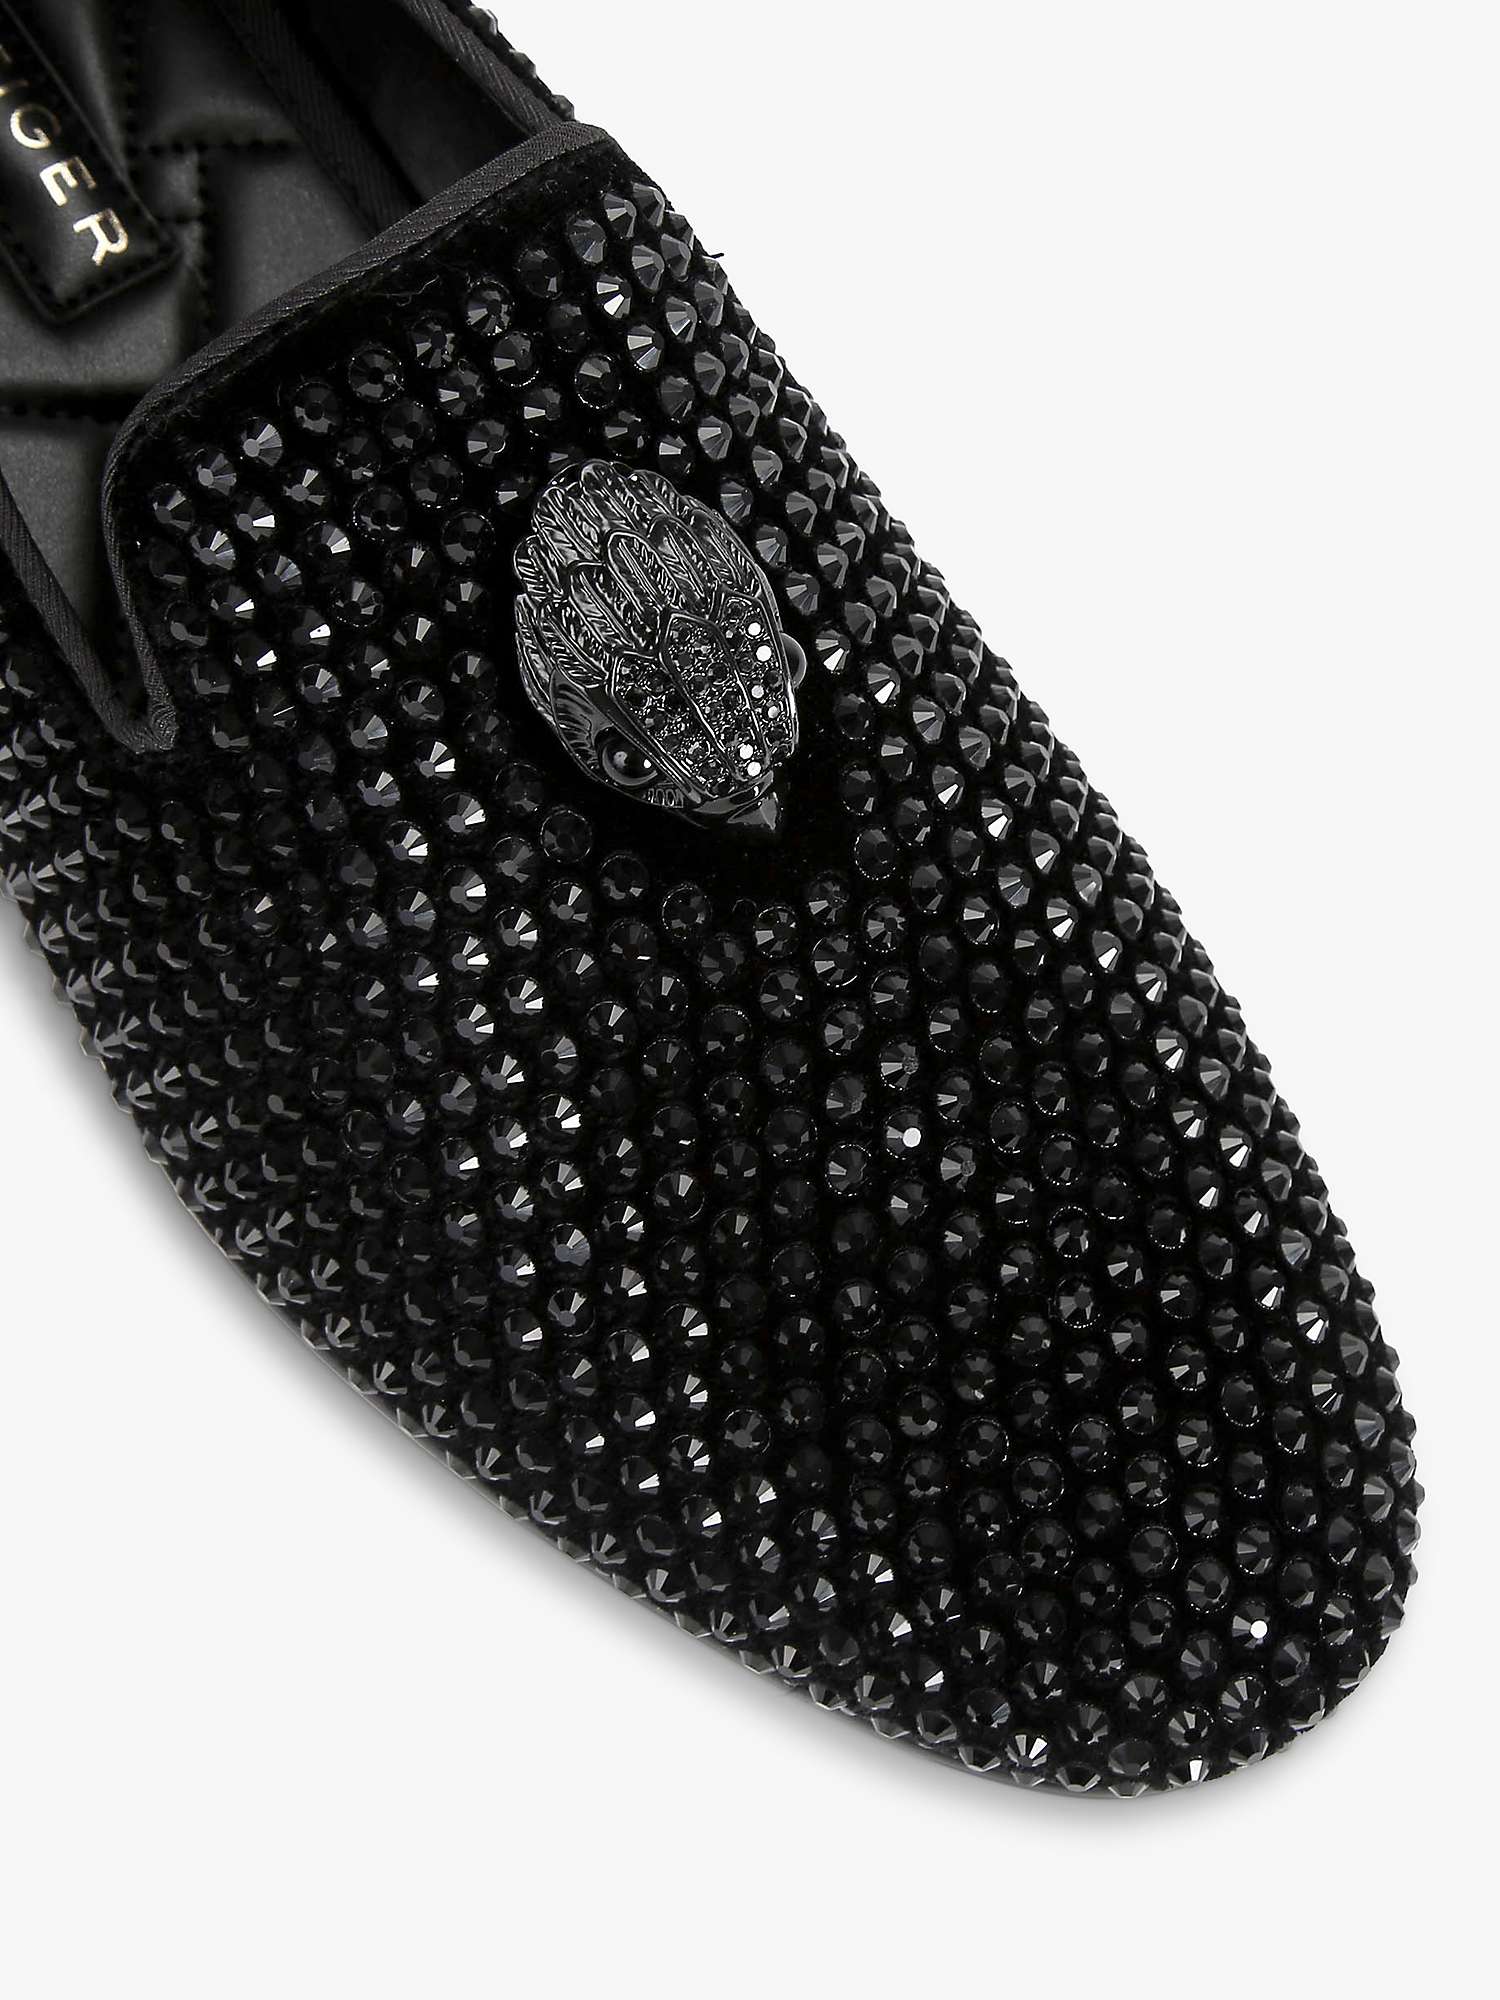 Buy Kurt Geiger London Ace Stud Embellishment Shoes Online at johnlewis.com